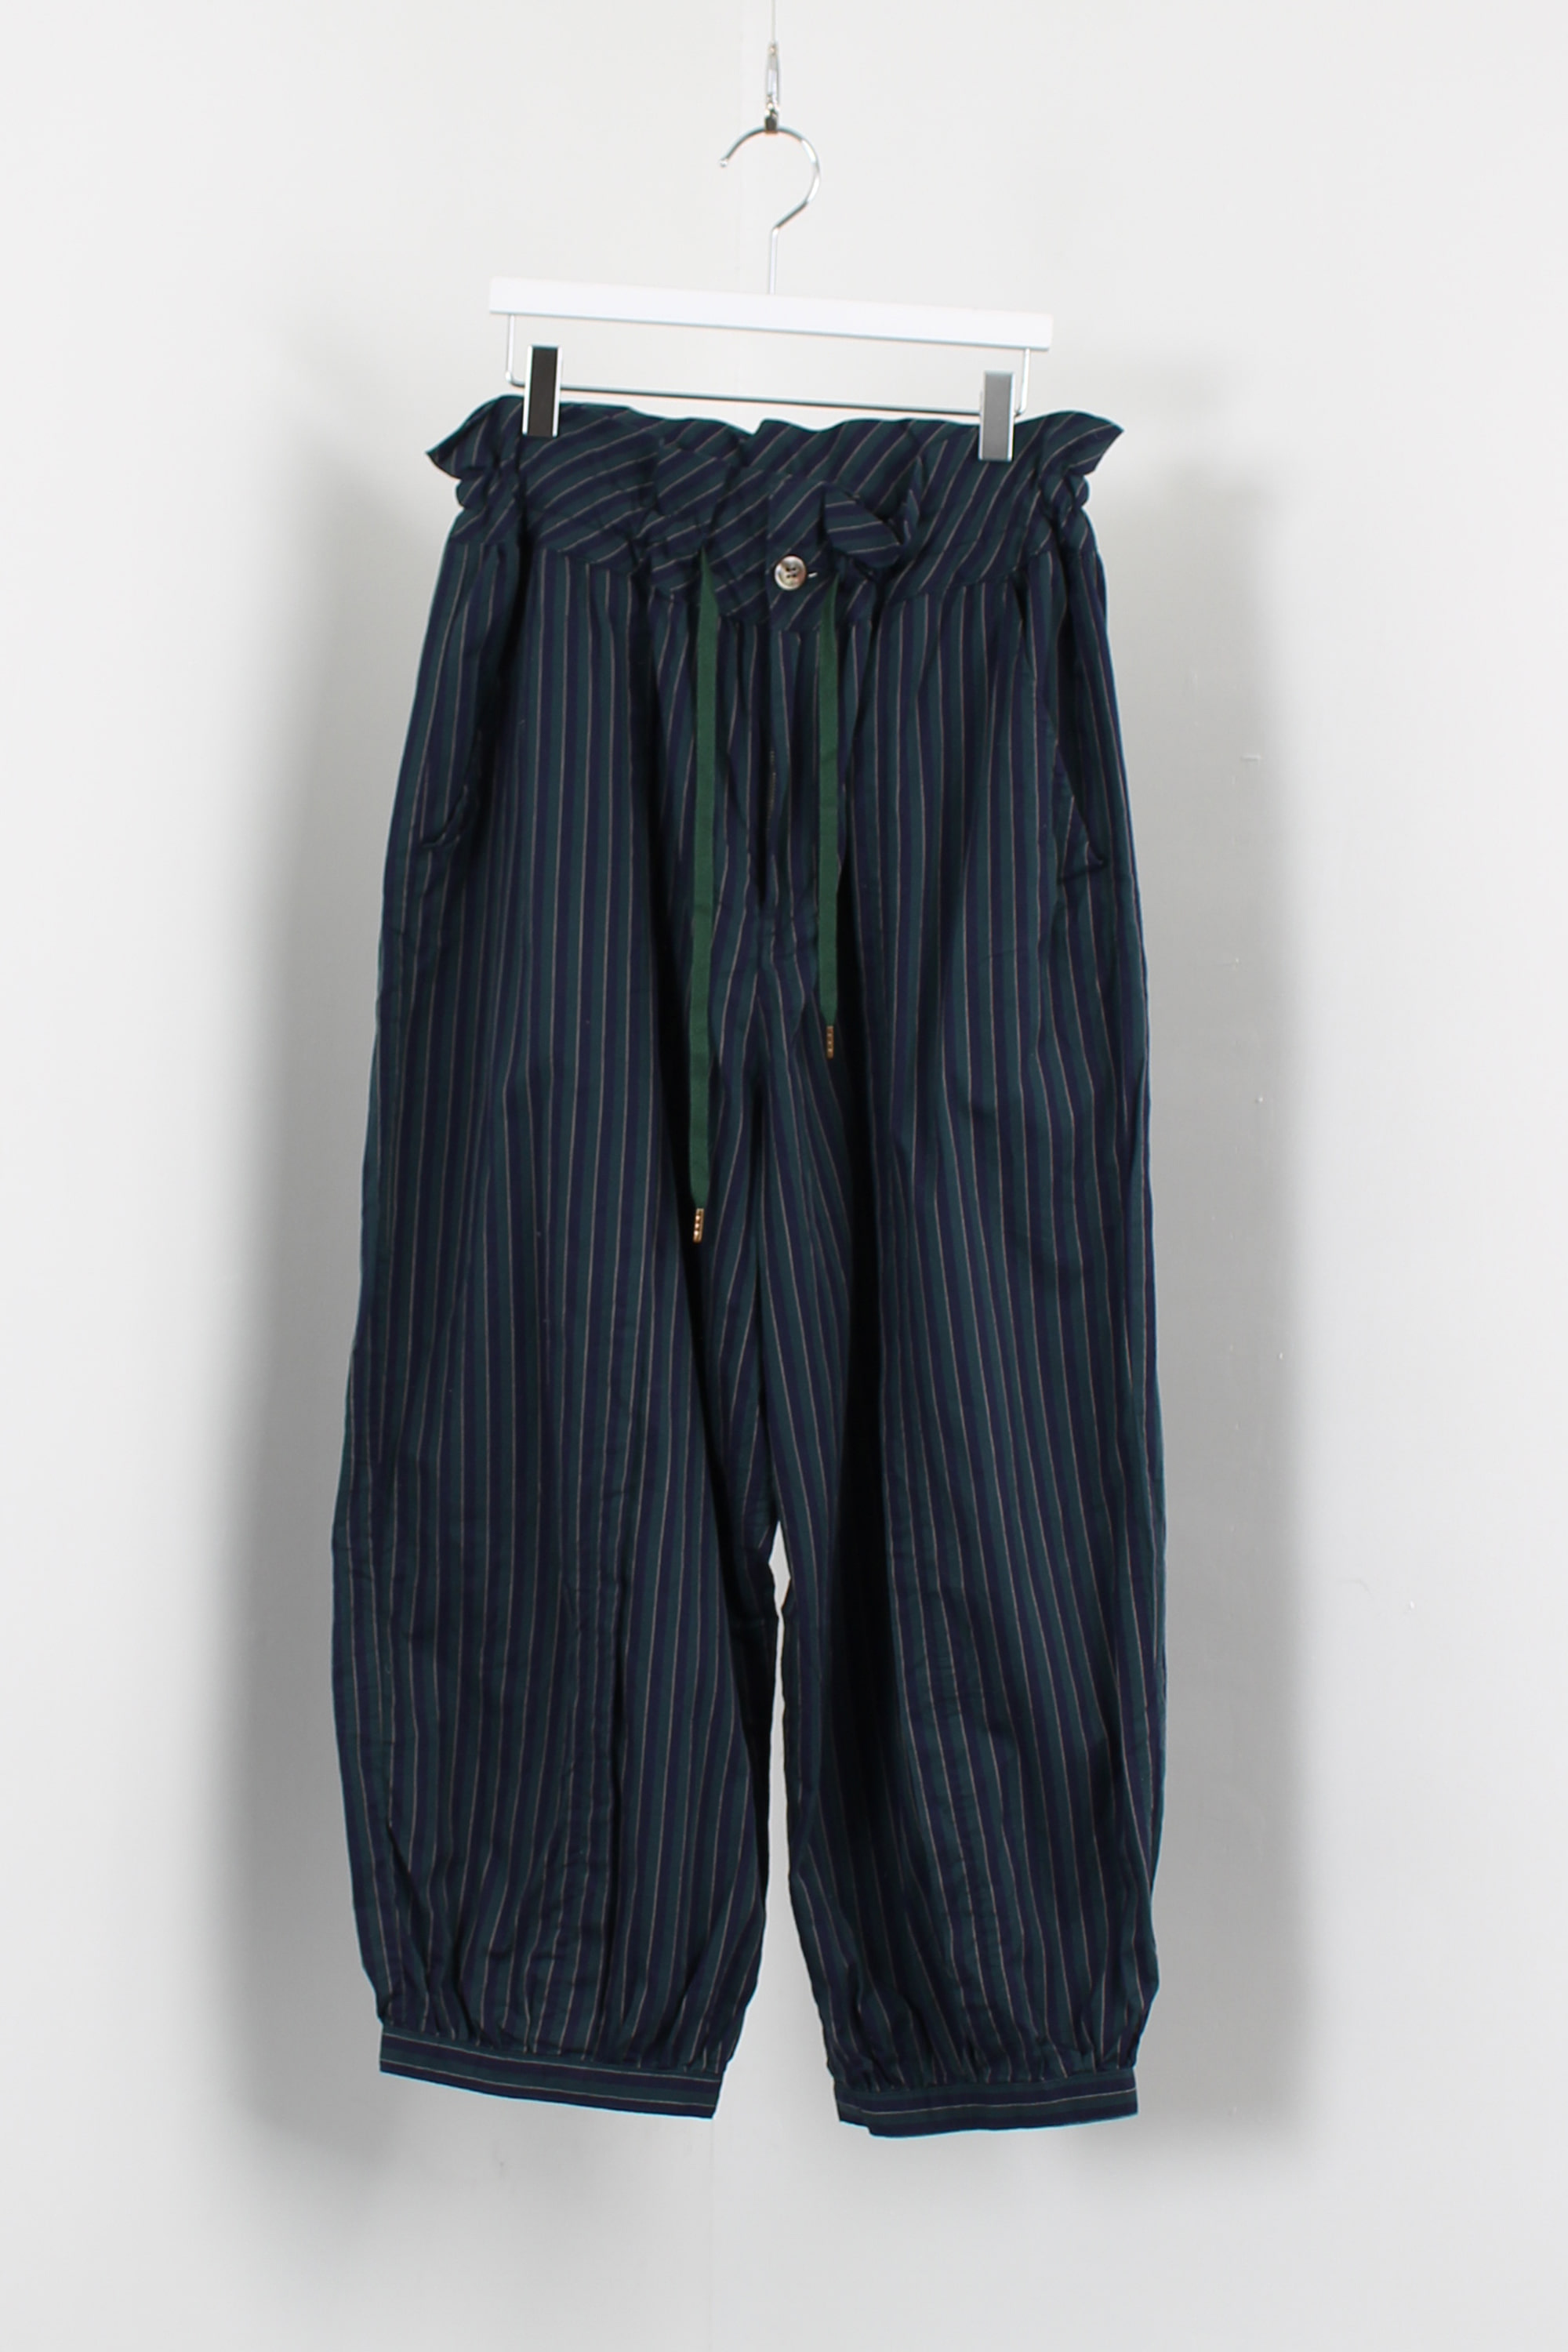 FRAPBOIS stripe pants